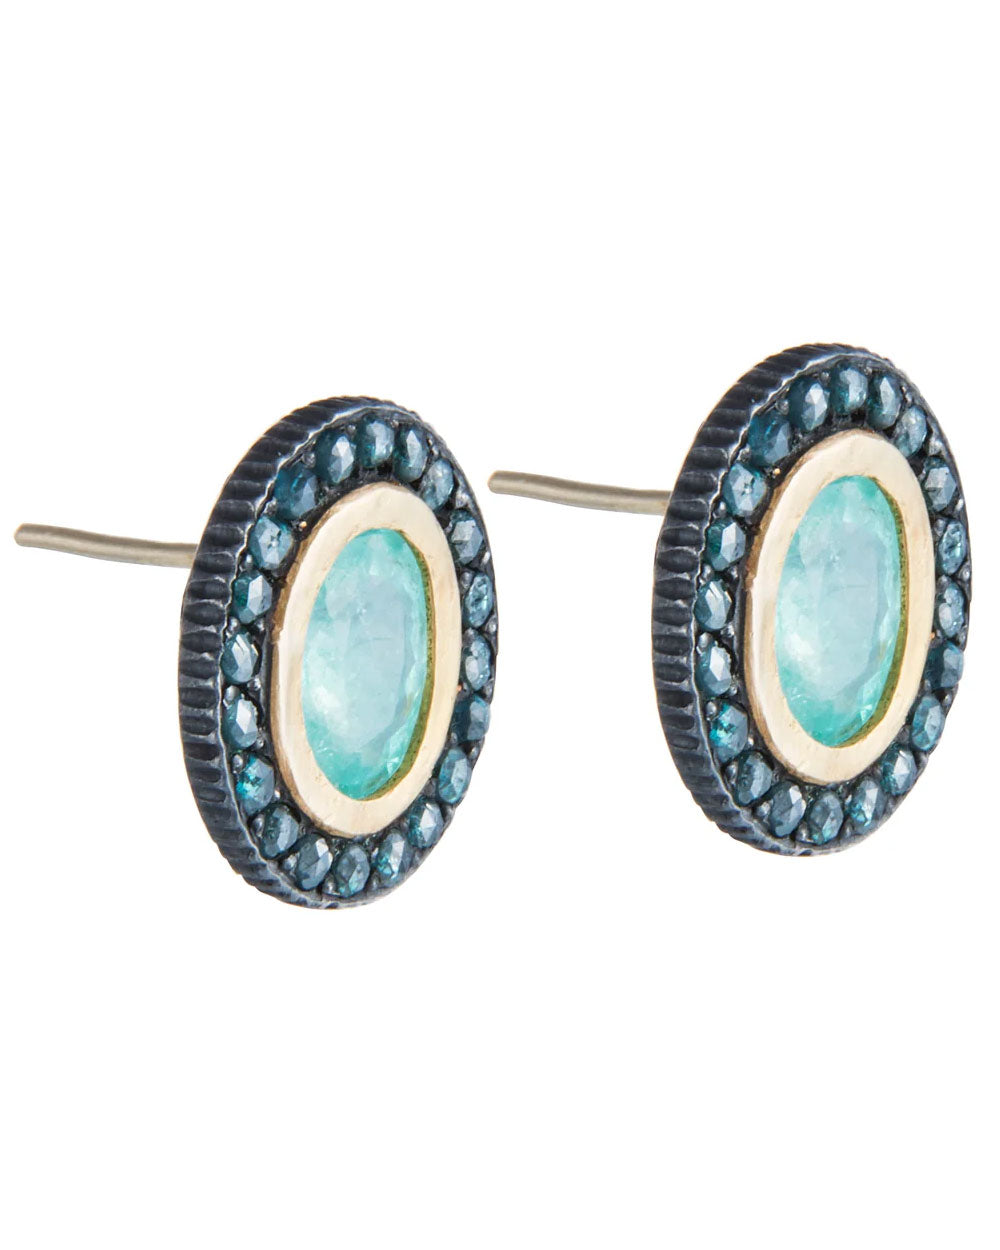 Paraiba Tourmaline and Blue Rose Cut Diamond Stud Earrings